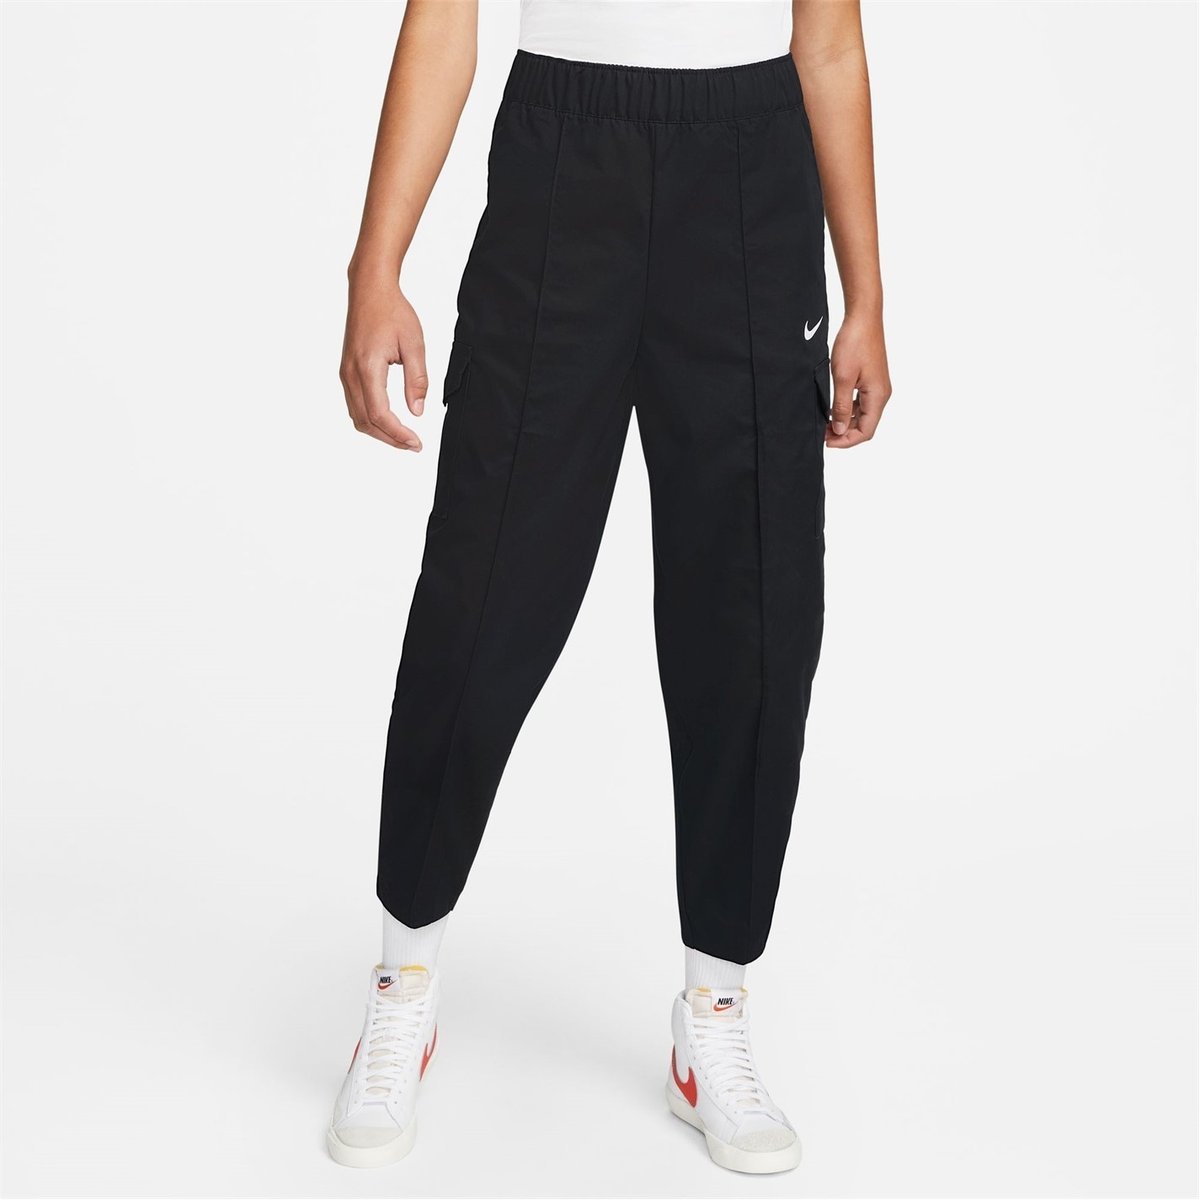 Nike Sportswear Women's Essential Fleece Pants Sangria / Heather - White